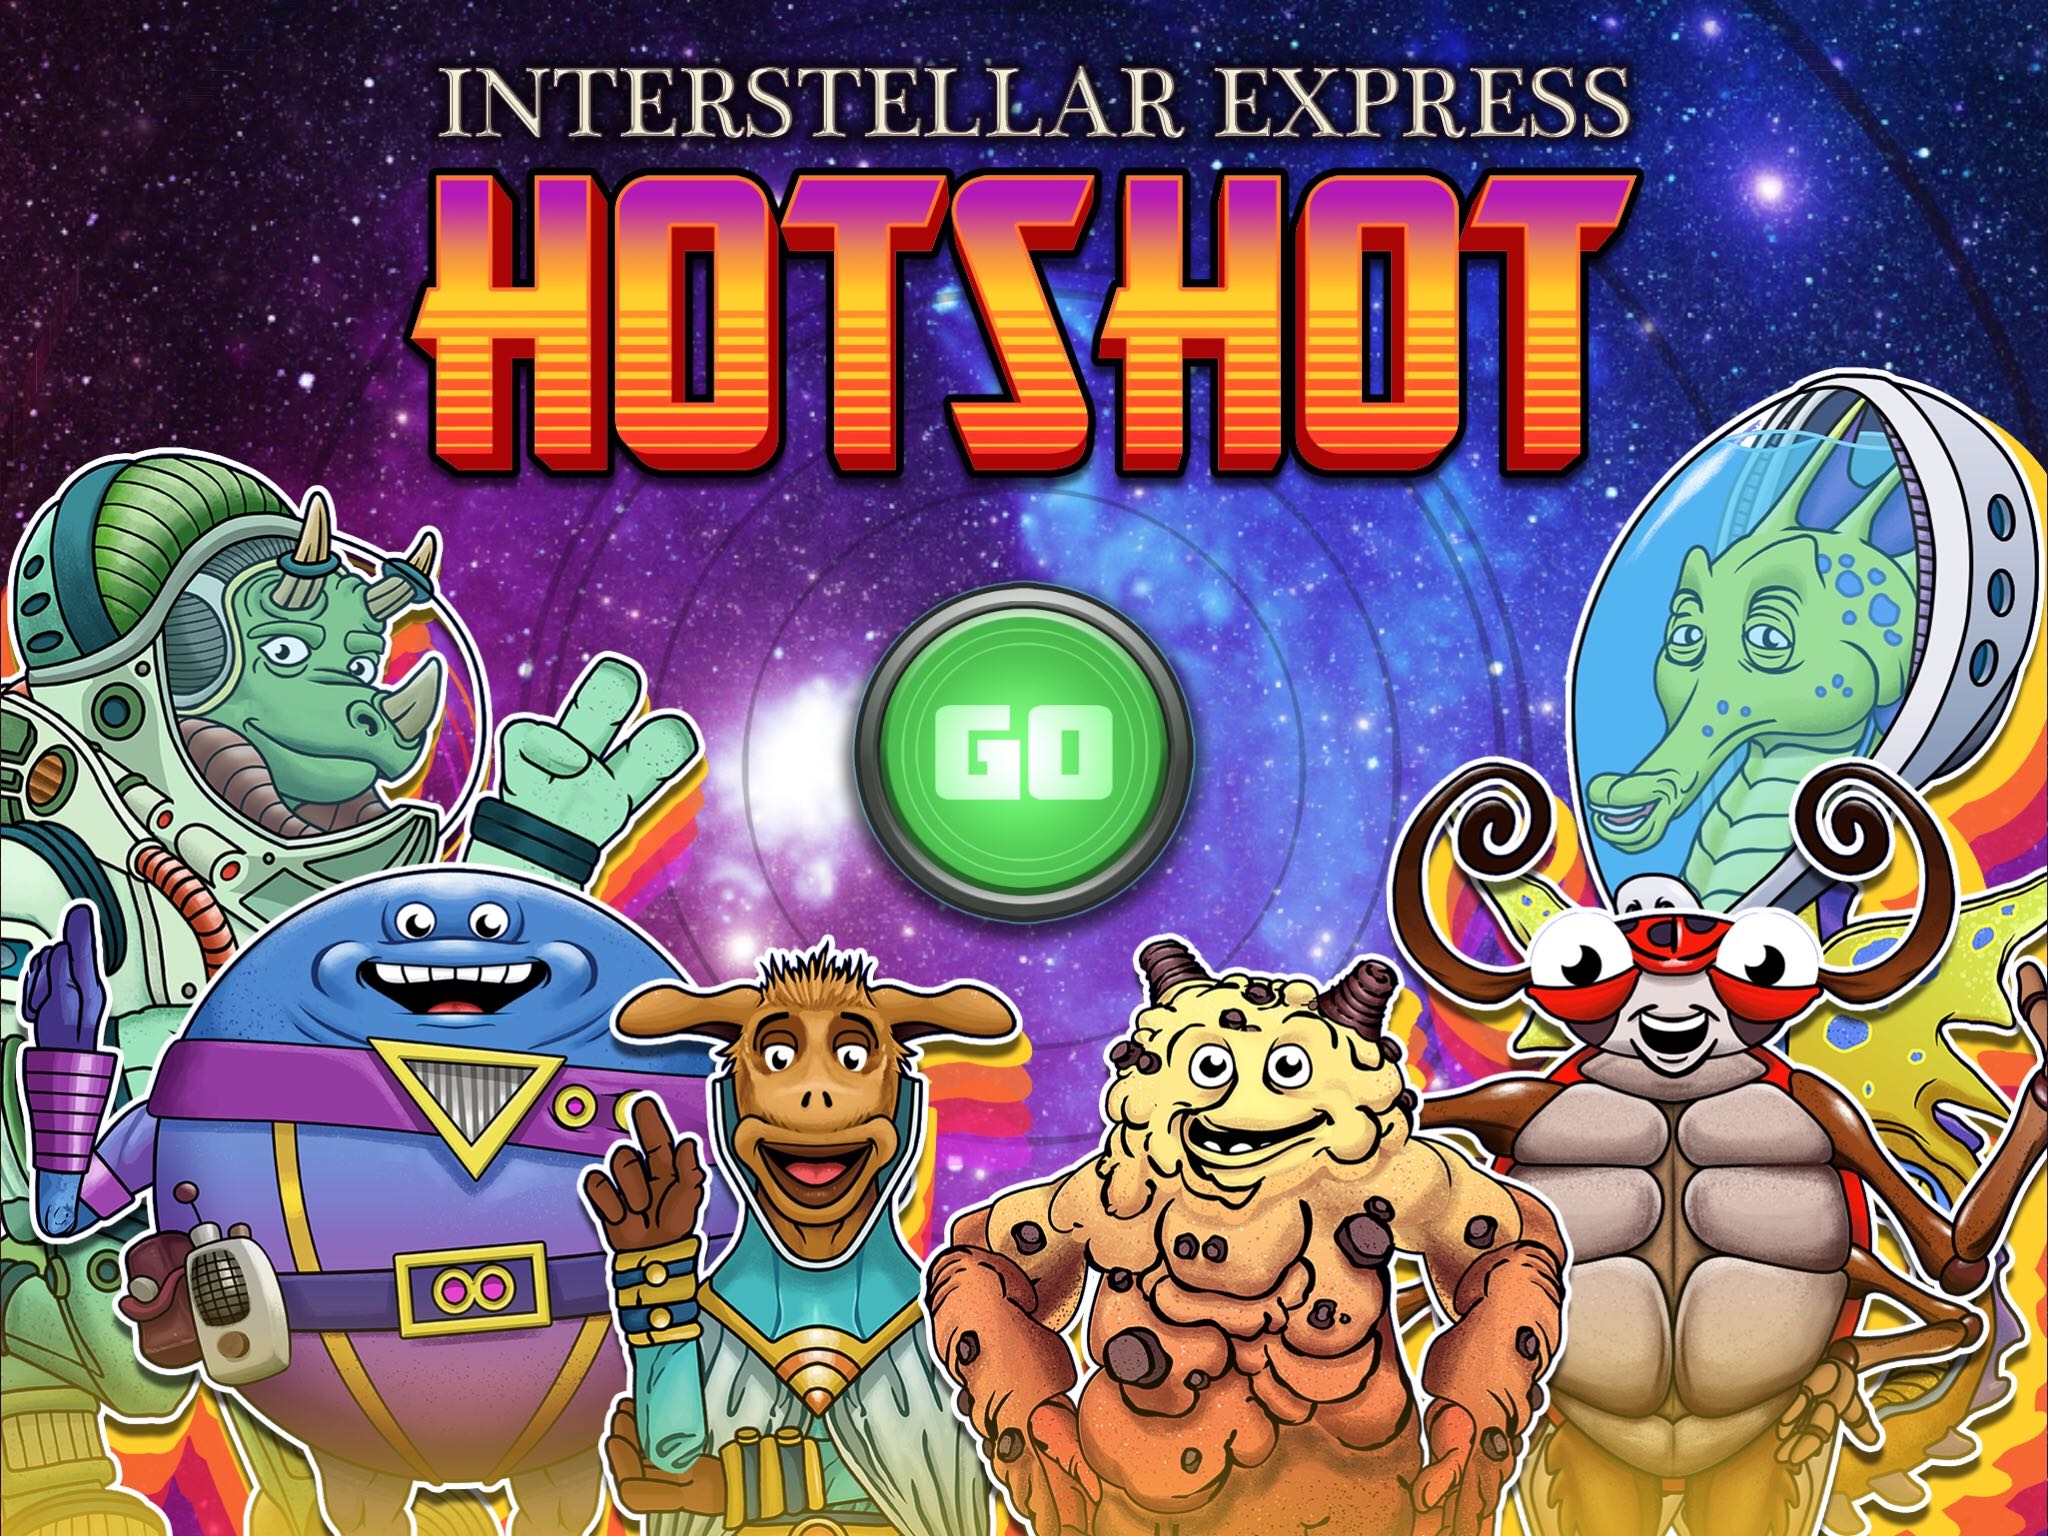 Interstellar Express hotshot app